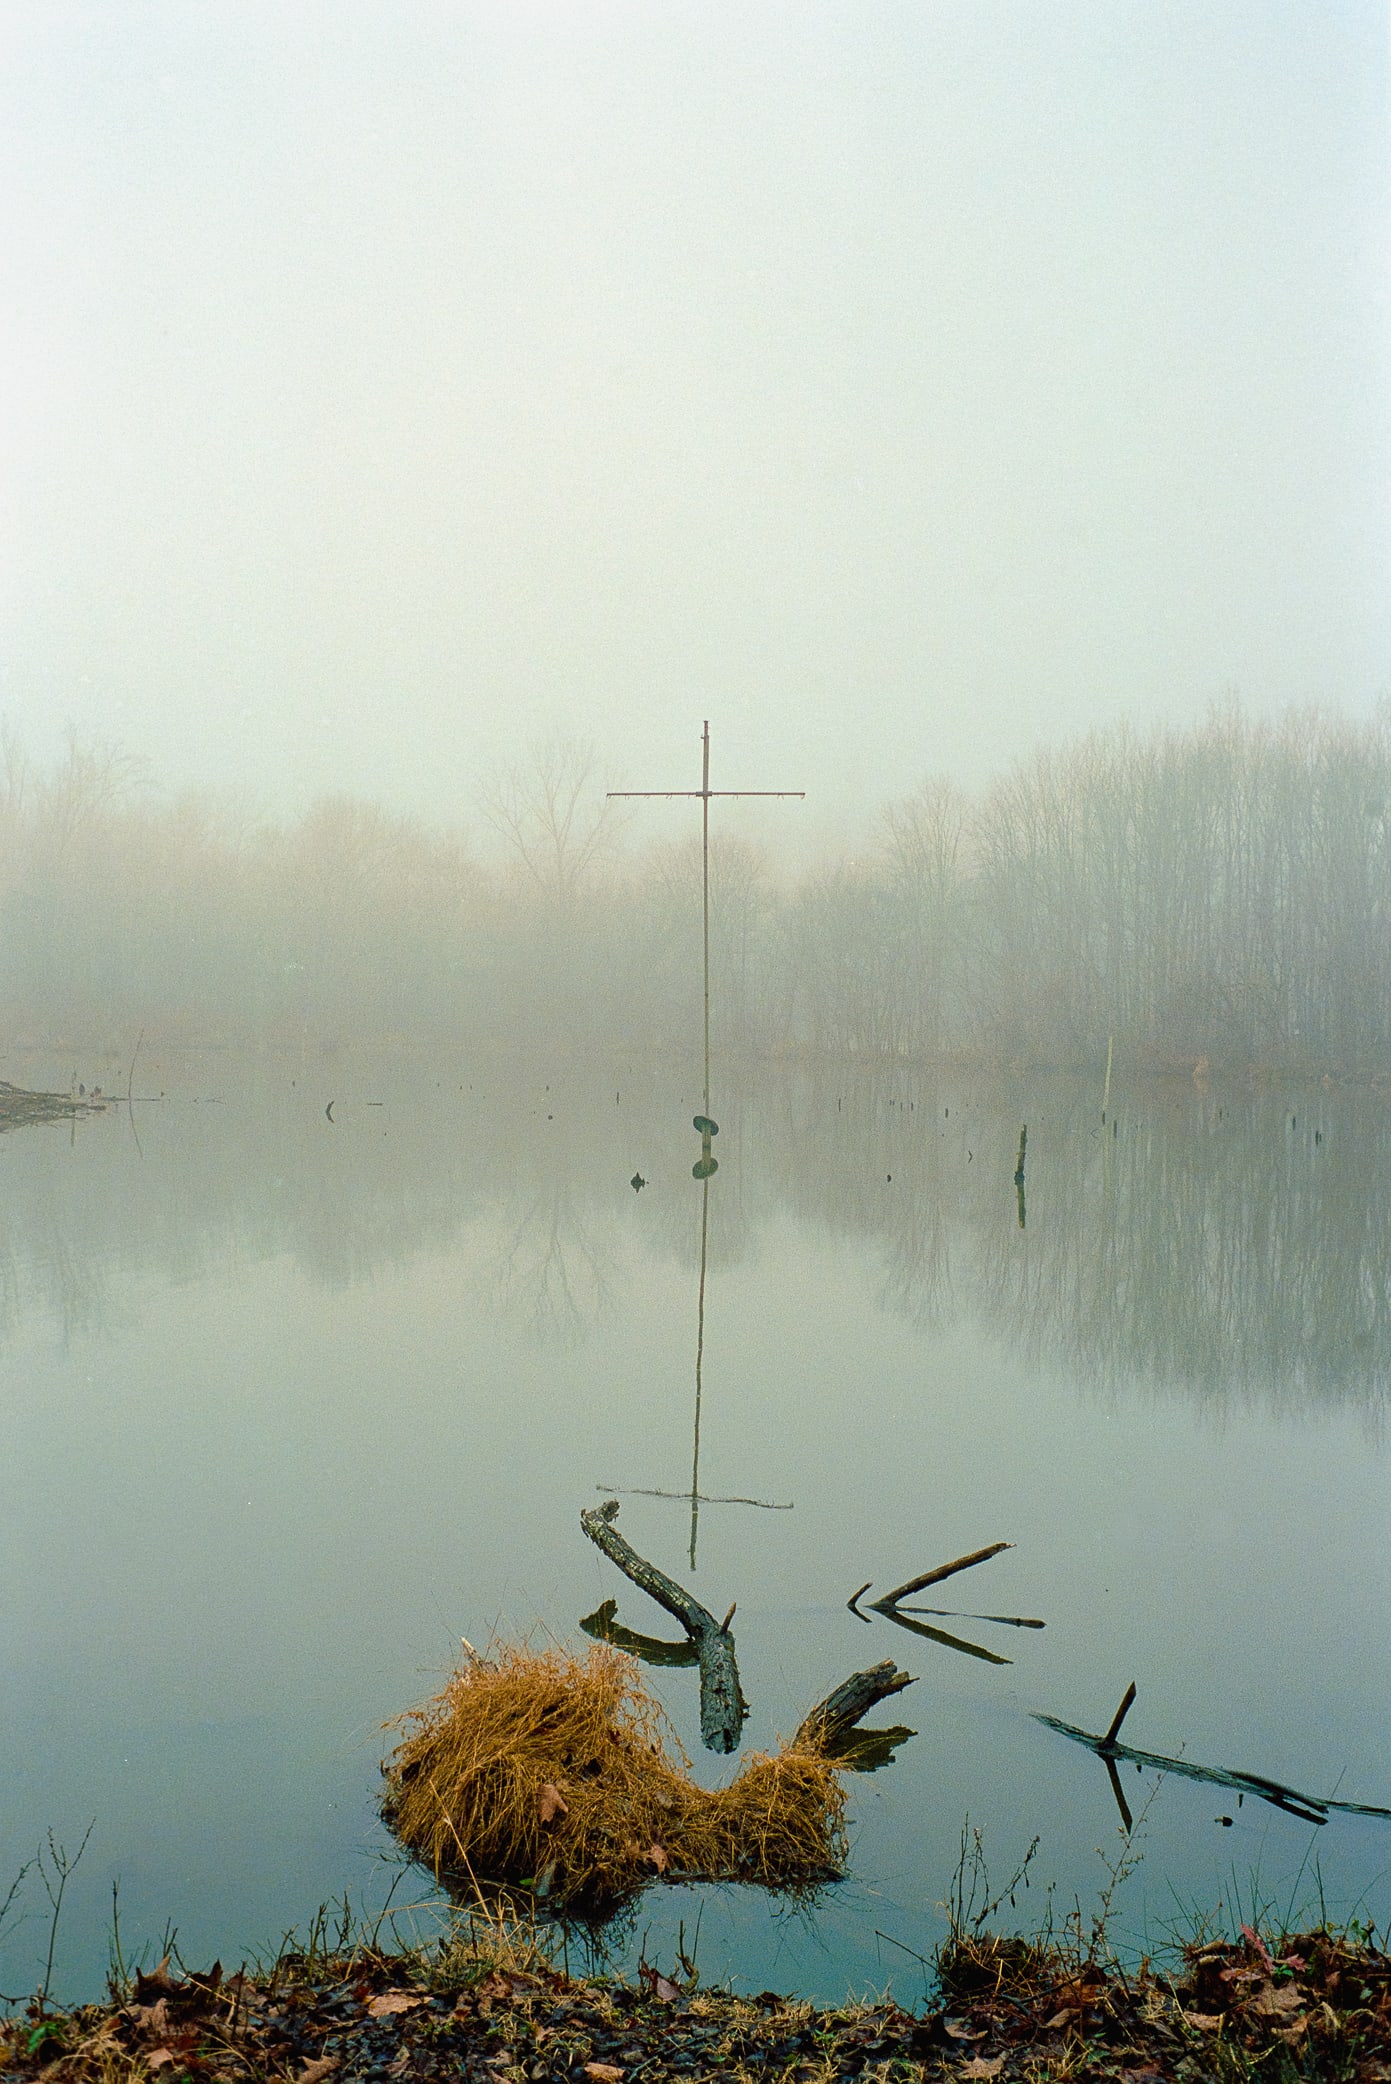 large thin cross in body of water in fog